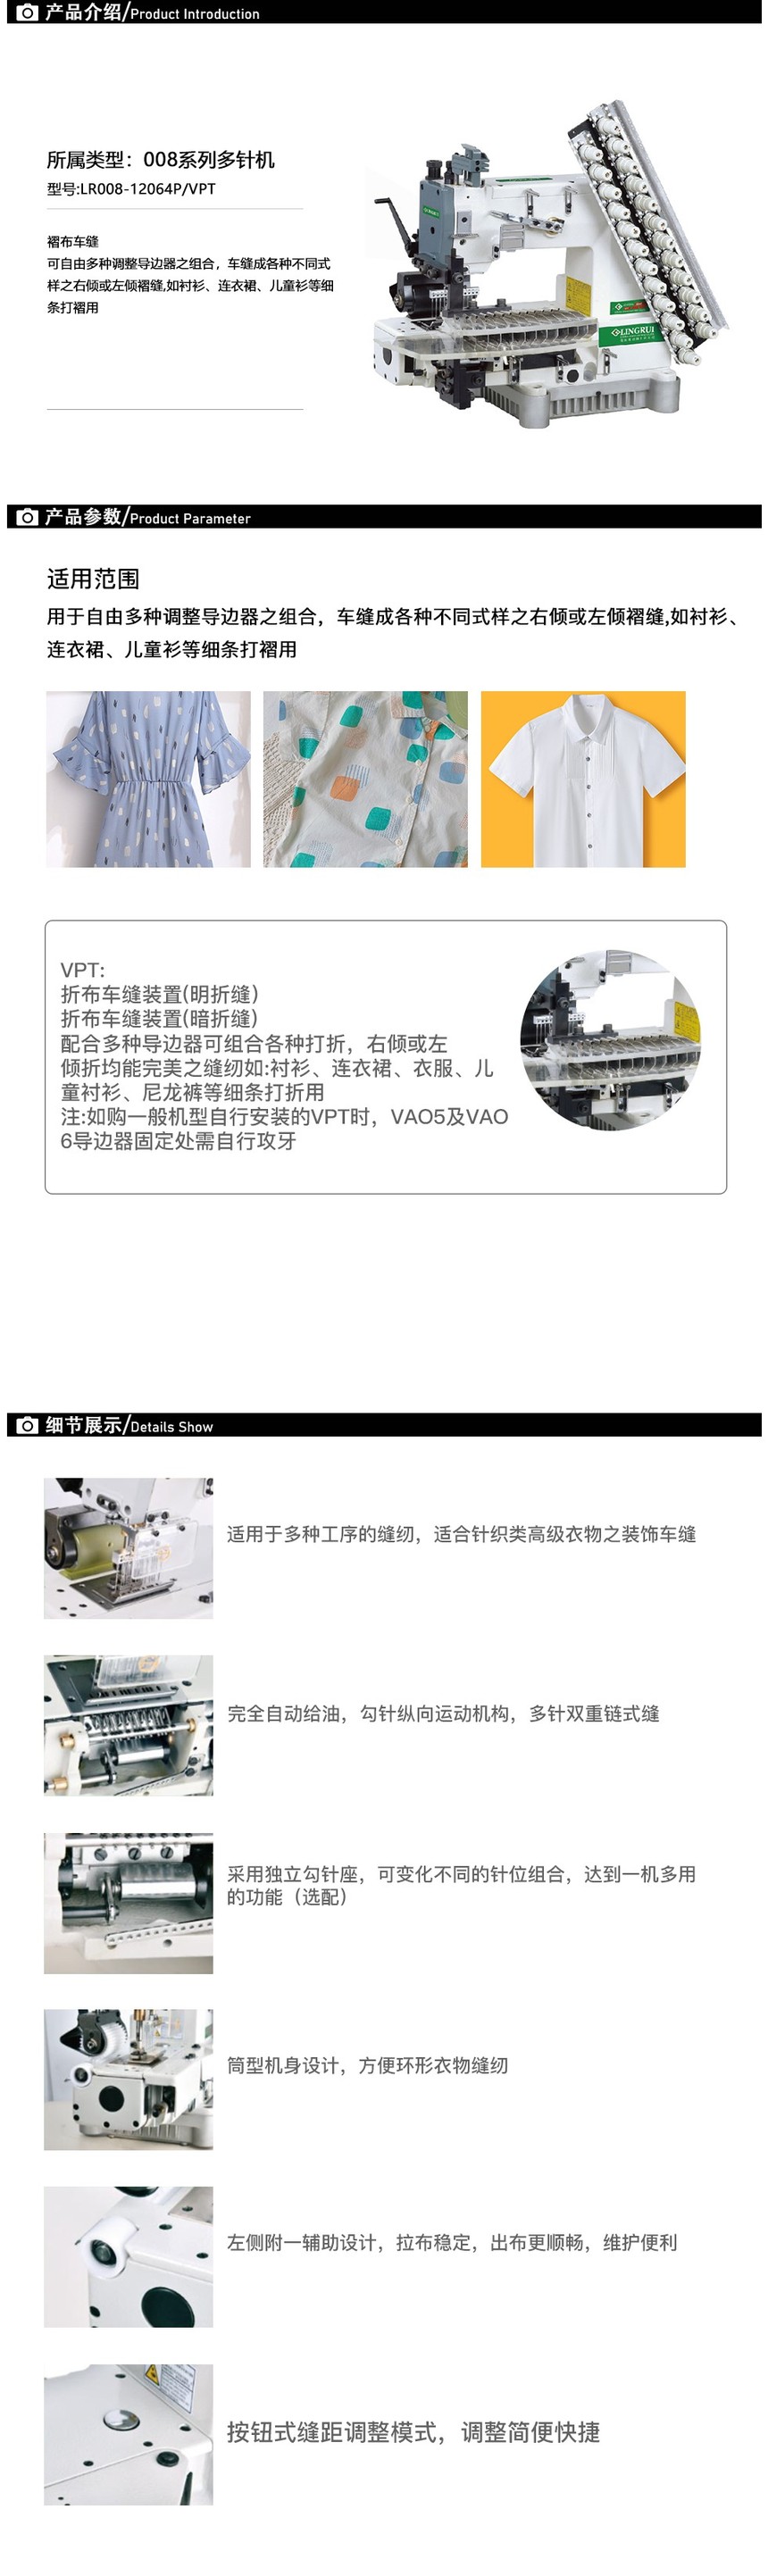 LR 008-12064P-VPT中文.jpg